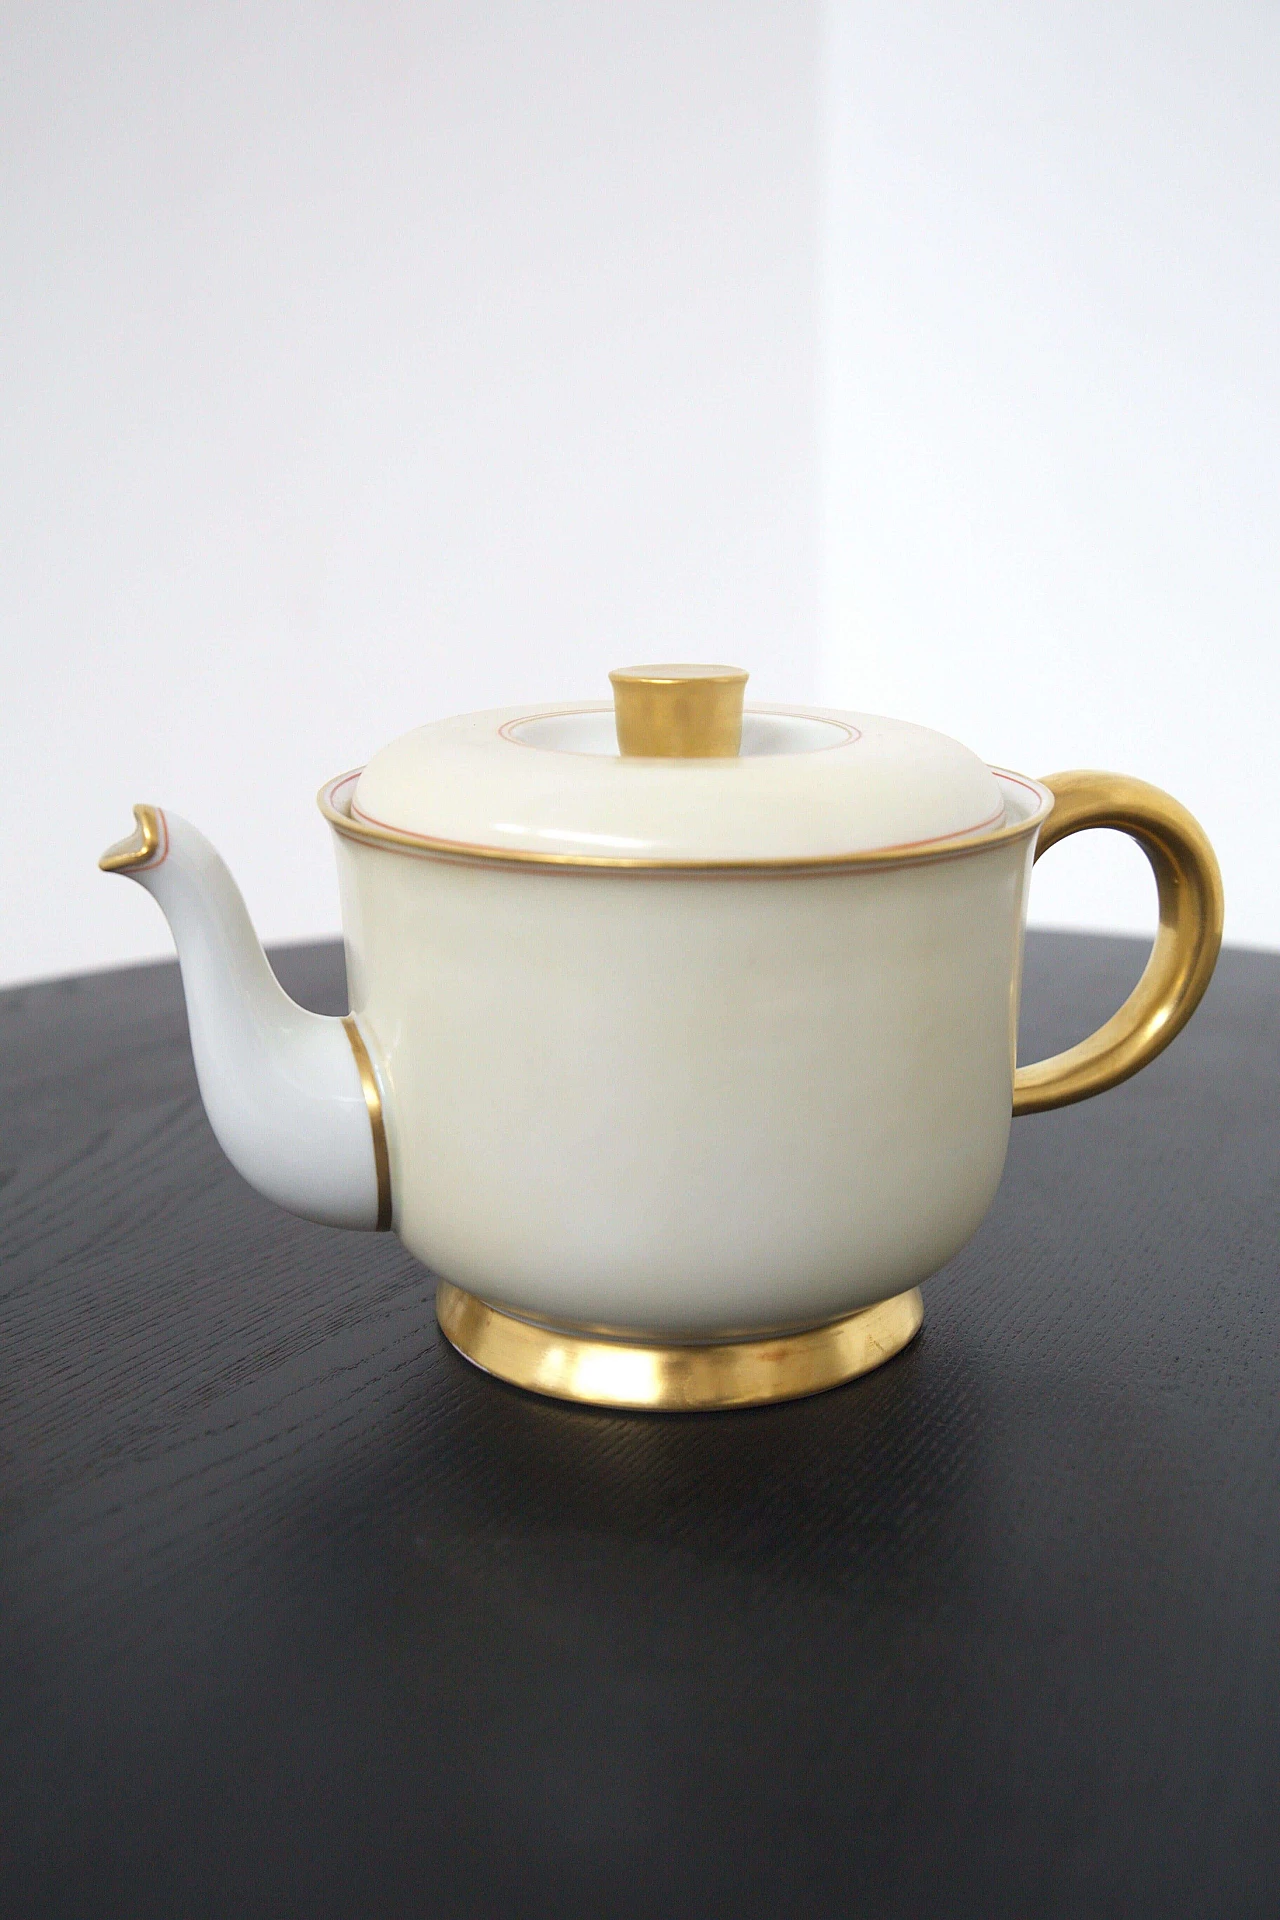 Ceramic and pure gold tea set by Gio Ponti for Ginori, 1930s 1477488